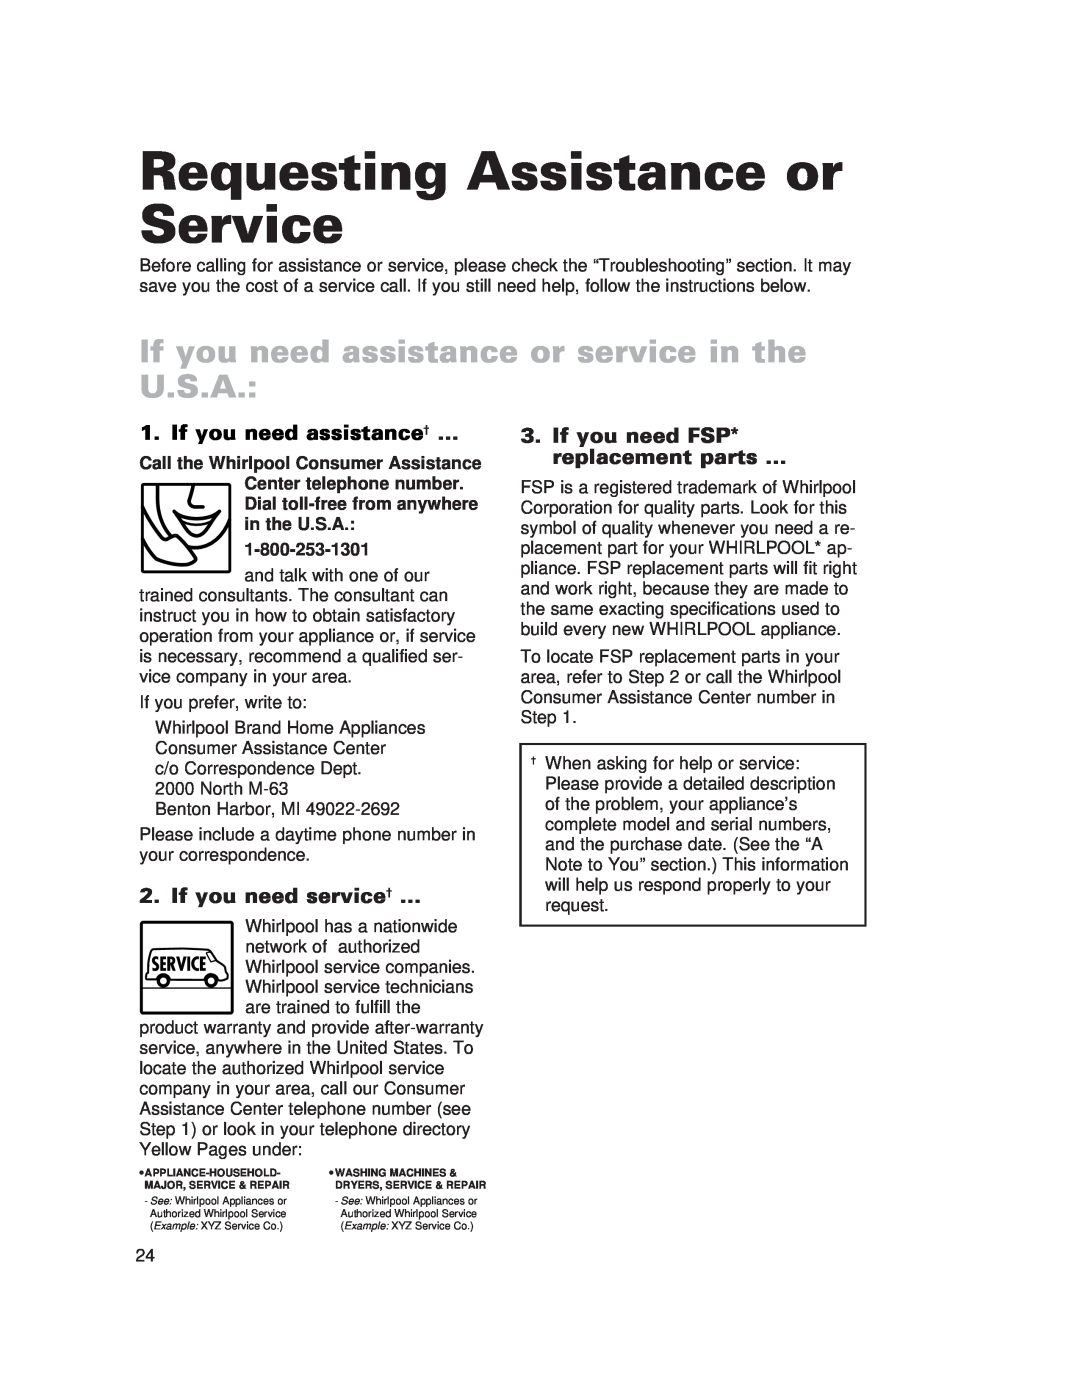 Whirlpool 910 Series warranty Requesting Assistance or Service, If you need assistance or service in the U.S.A 